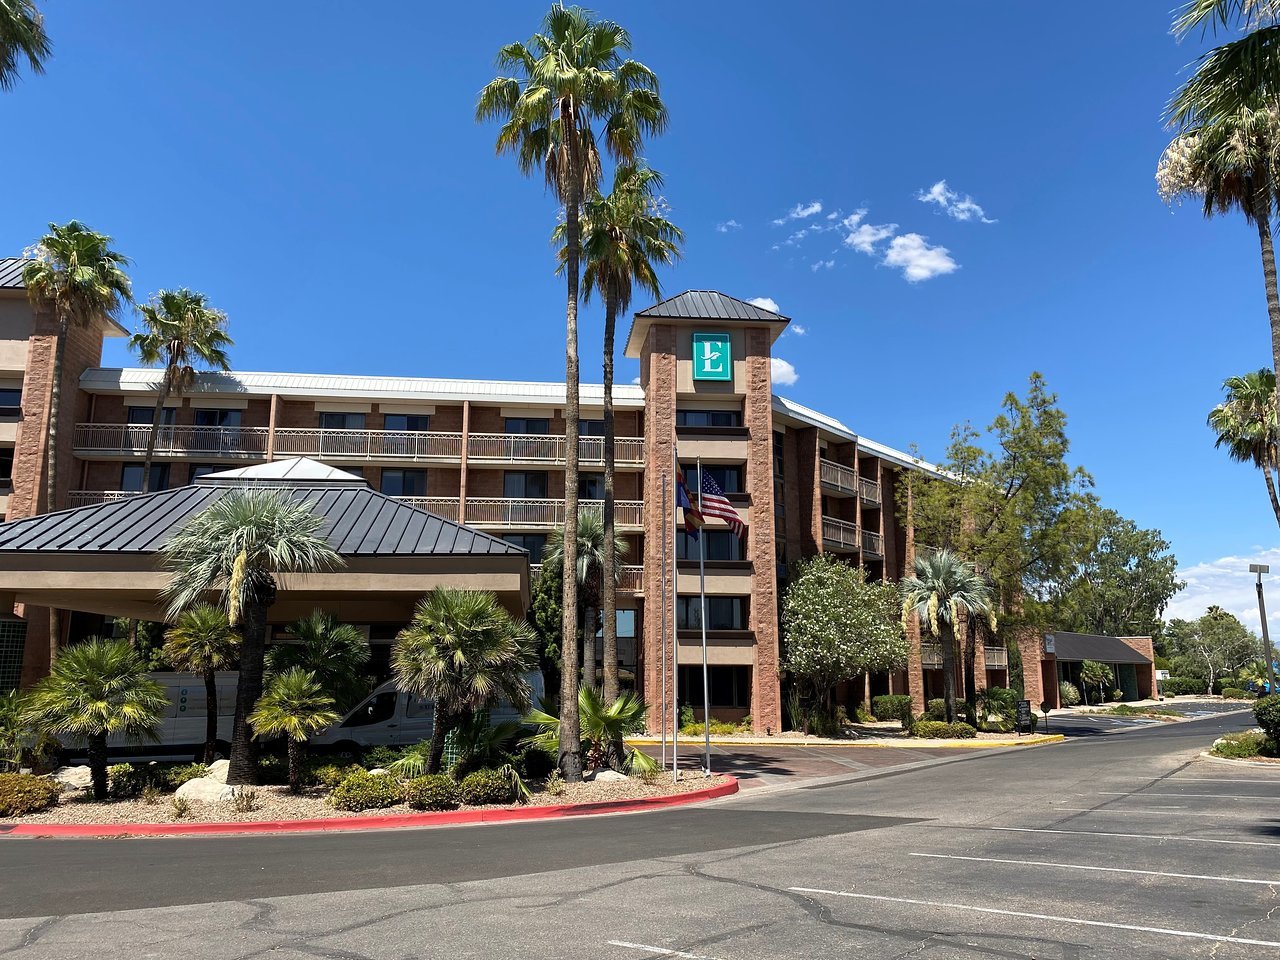 Photo of Embassy Suites by Hilton Tucson East, Tucson, AZ